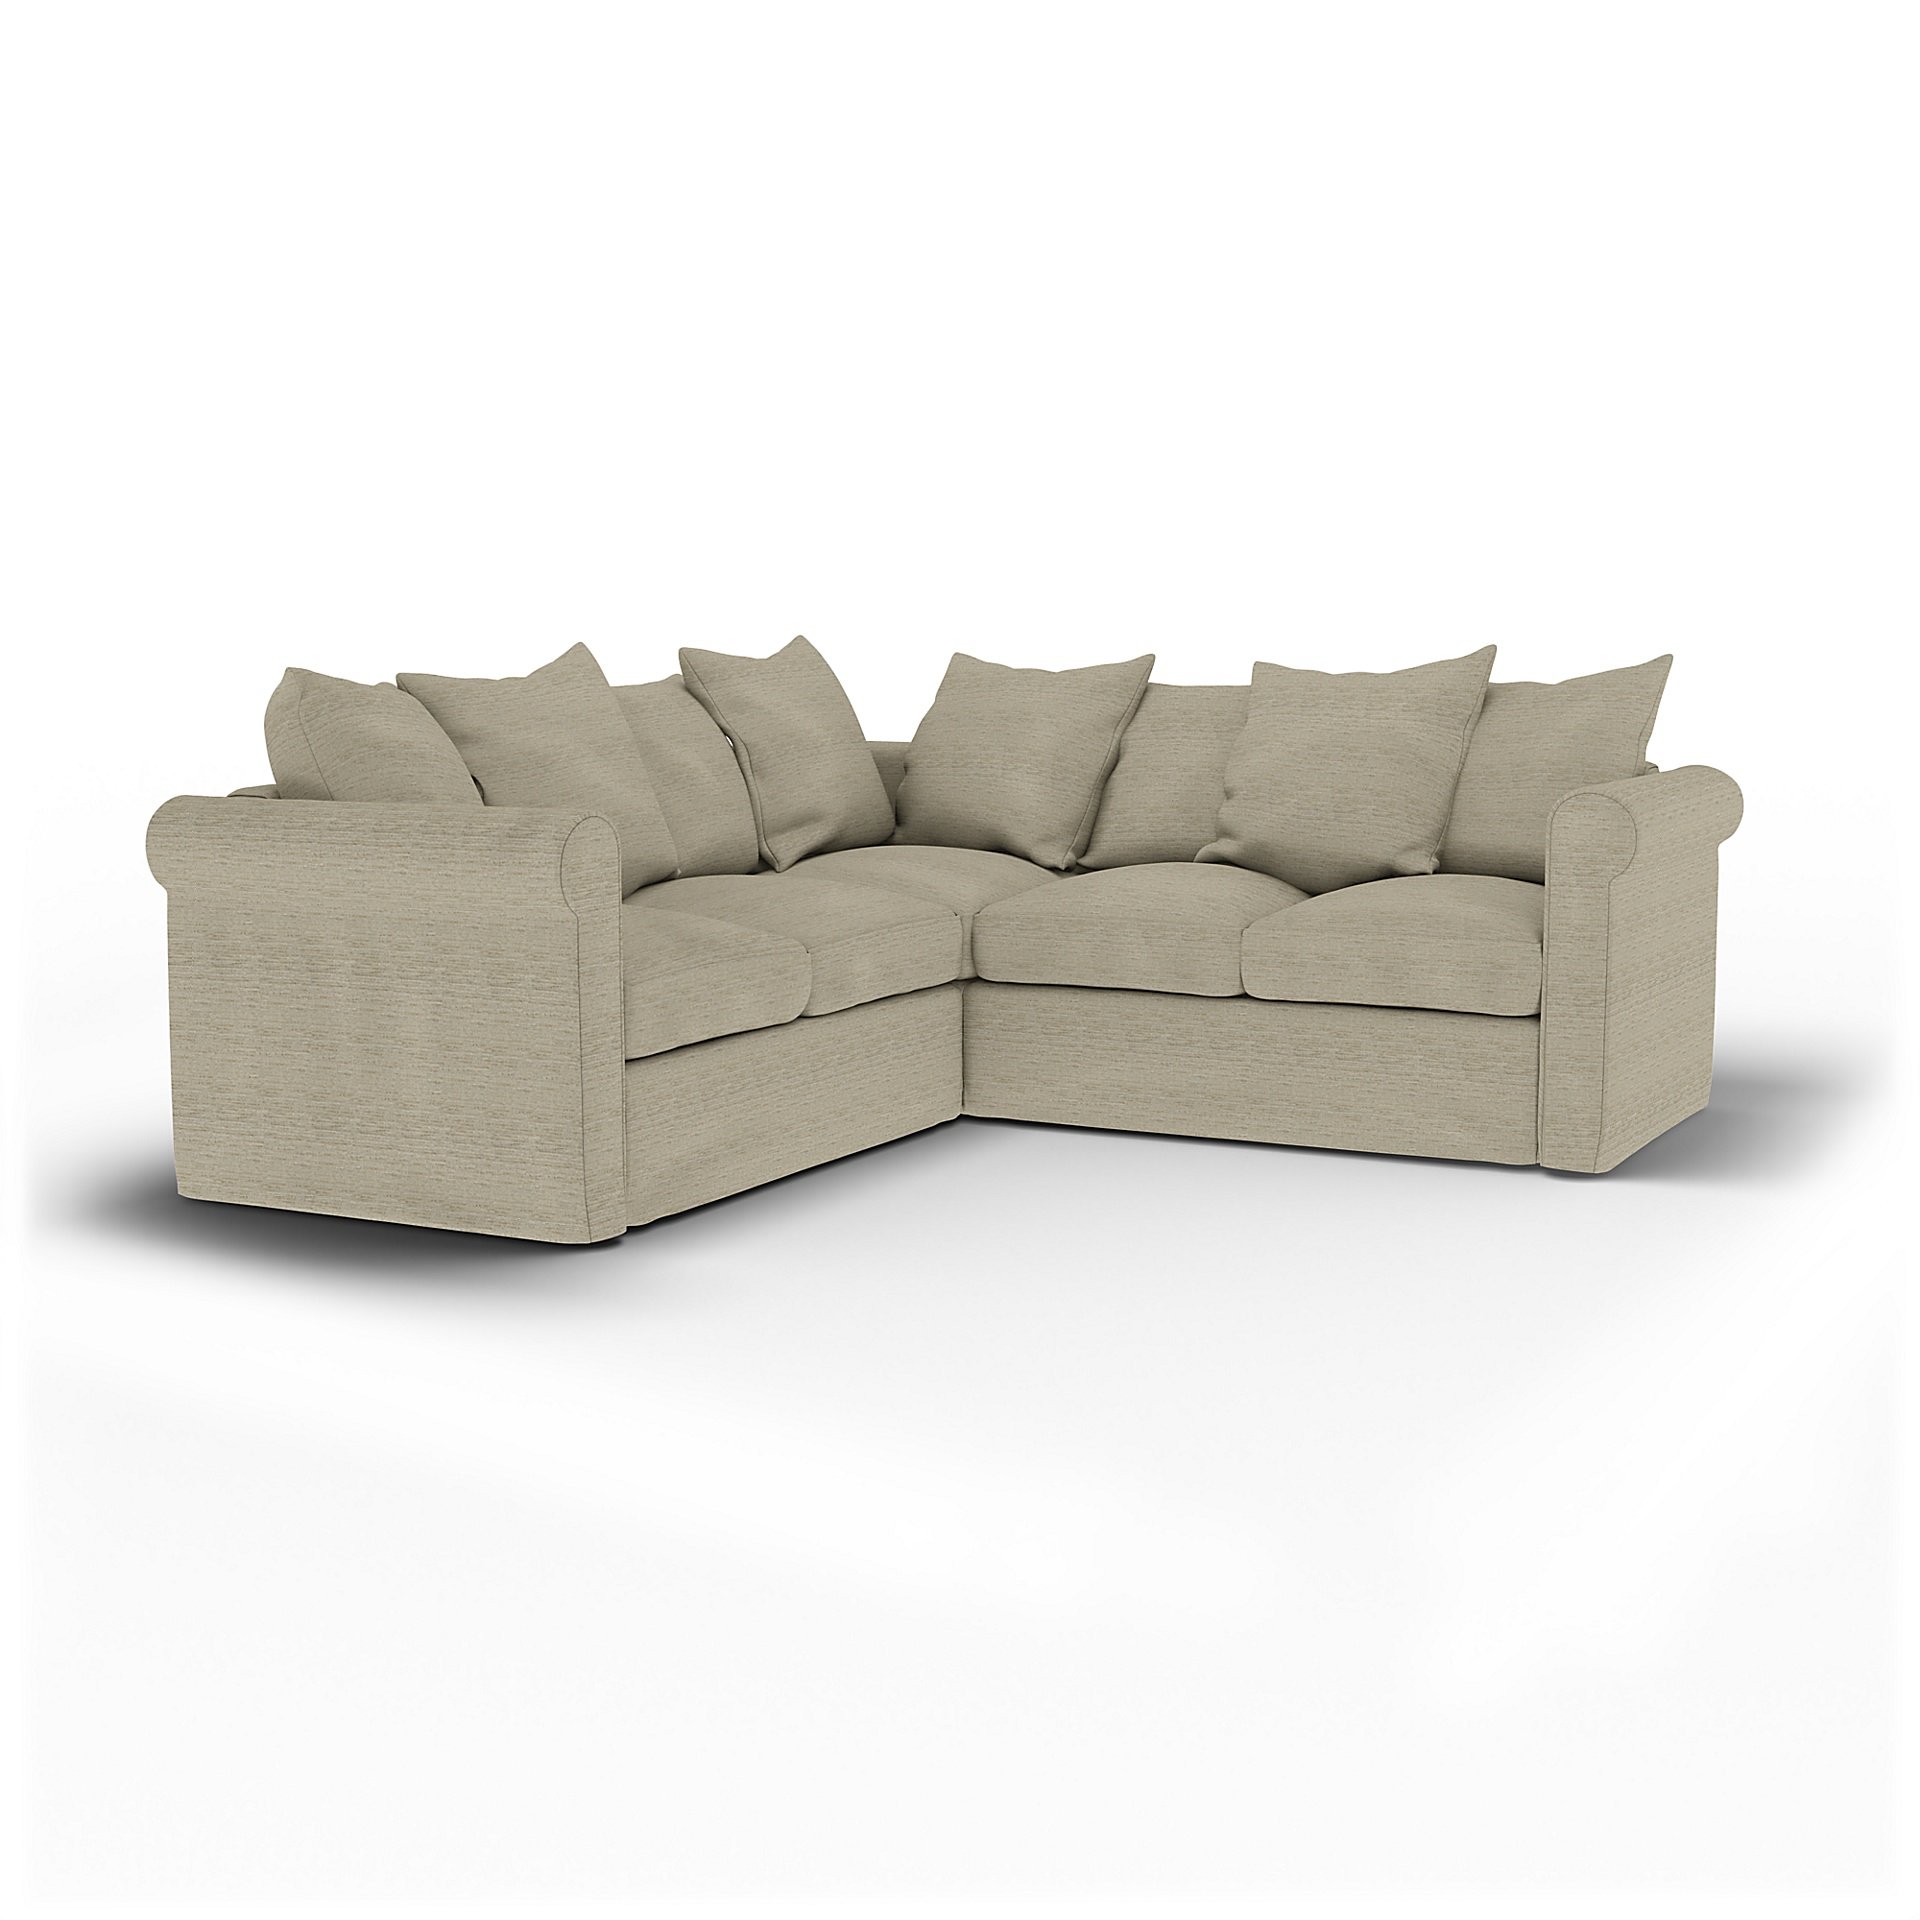 IKEA - Gronlid 4 Seater Corner Sofa Cover, Light Sand, Boucle & Texture - Bemz